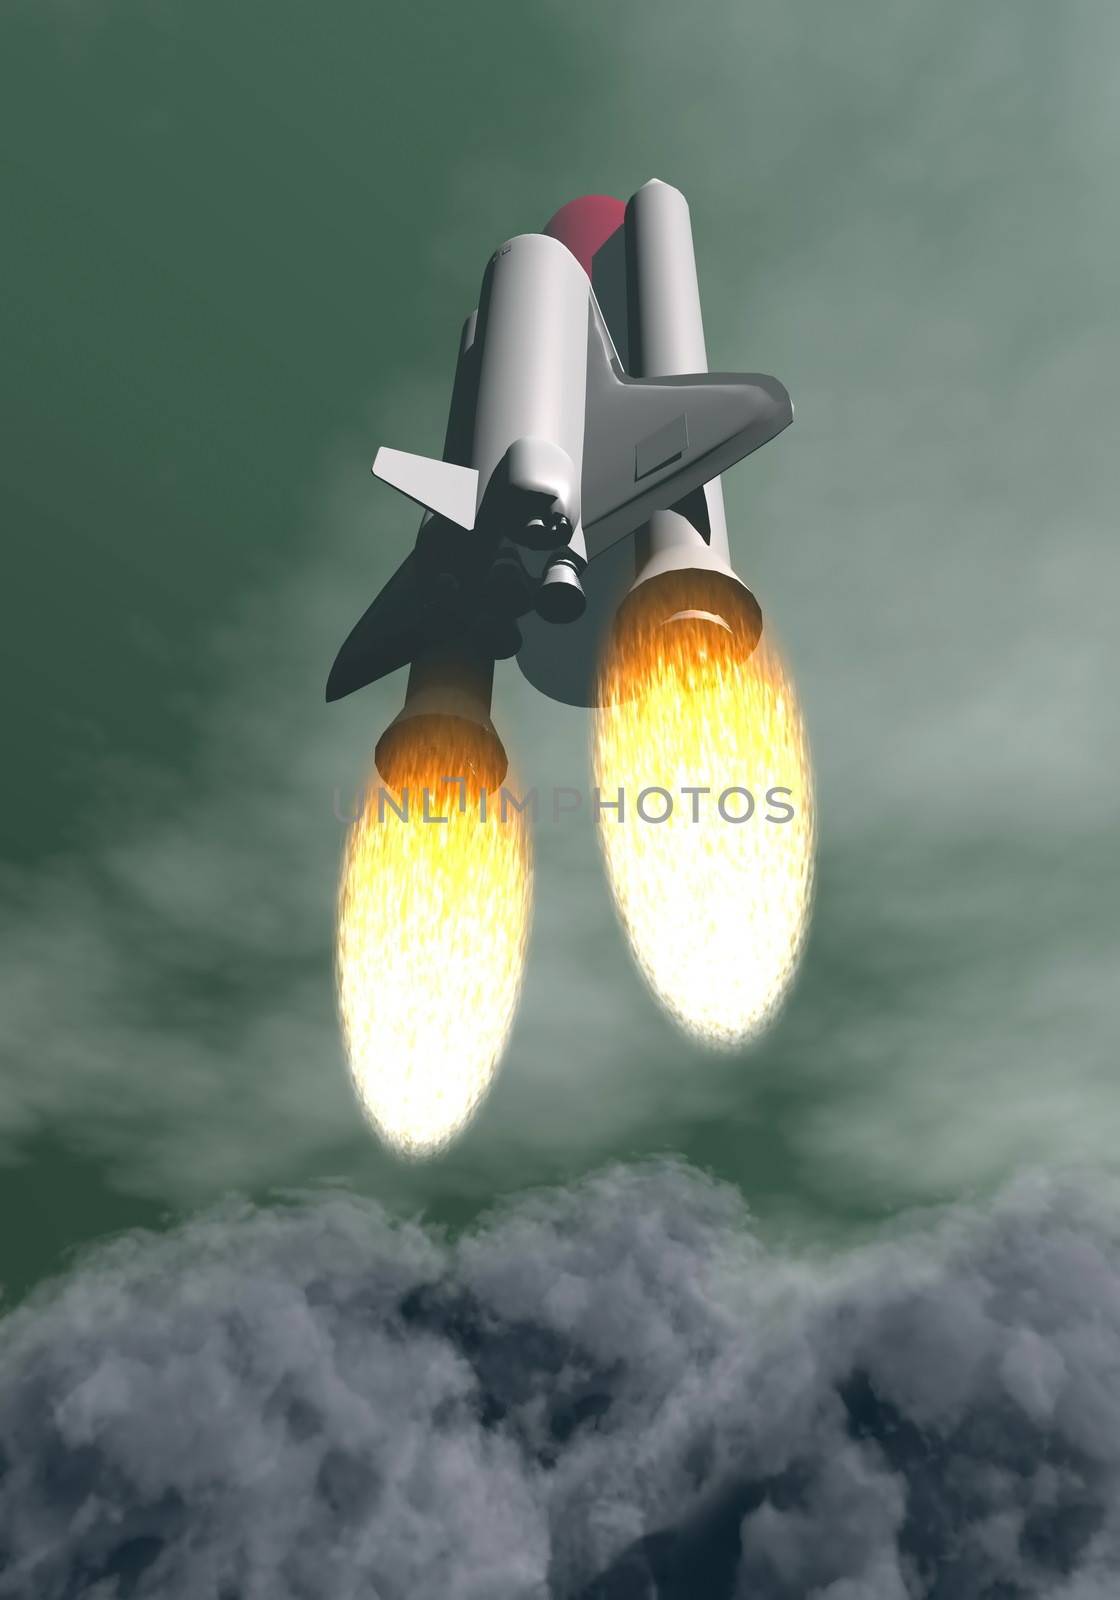 Shuttle taking off - 3D render by Elenaphotos21